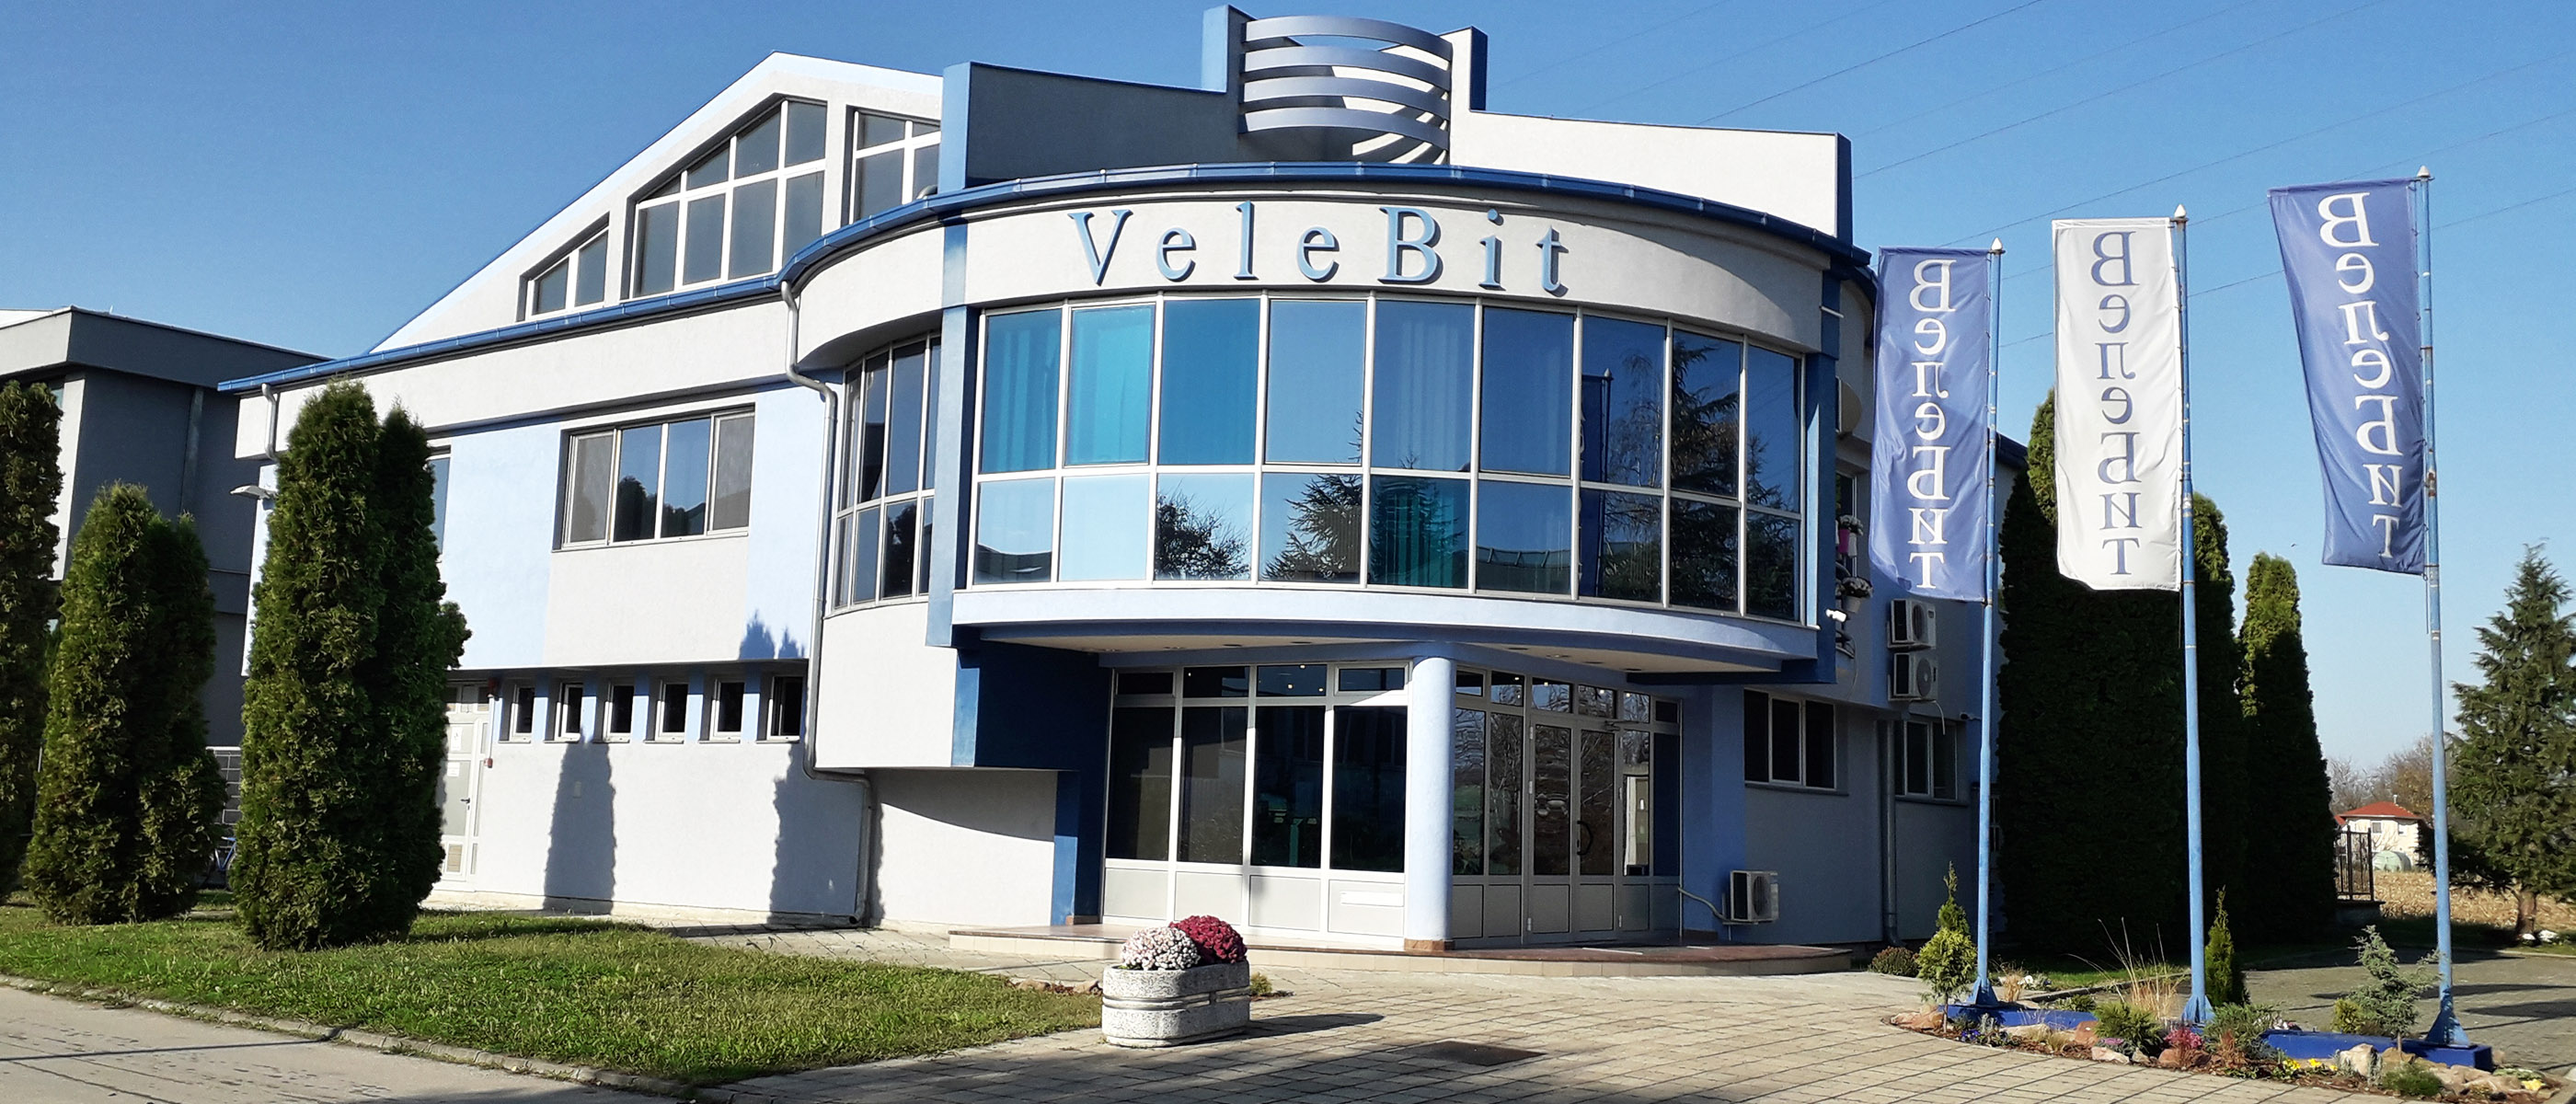 VeleBit company